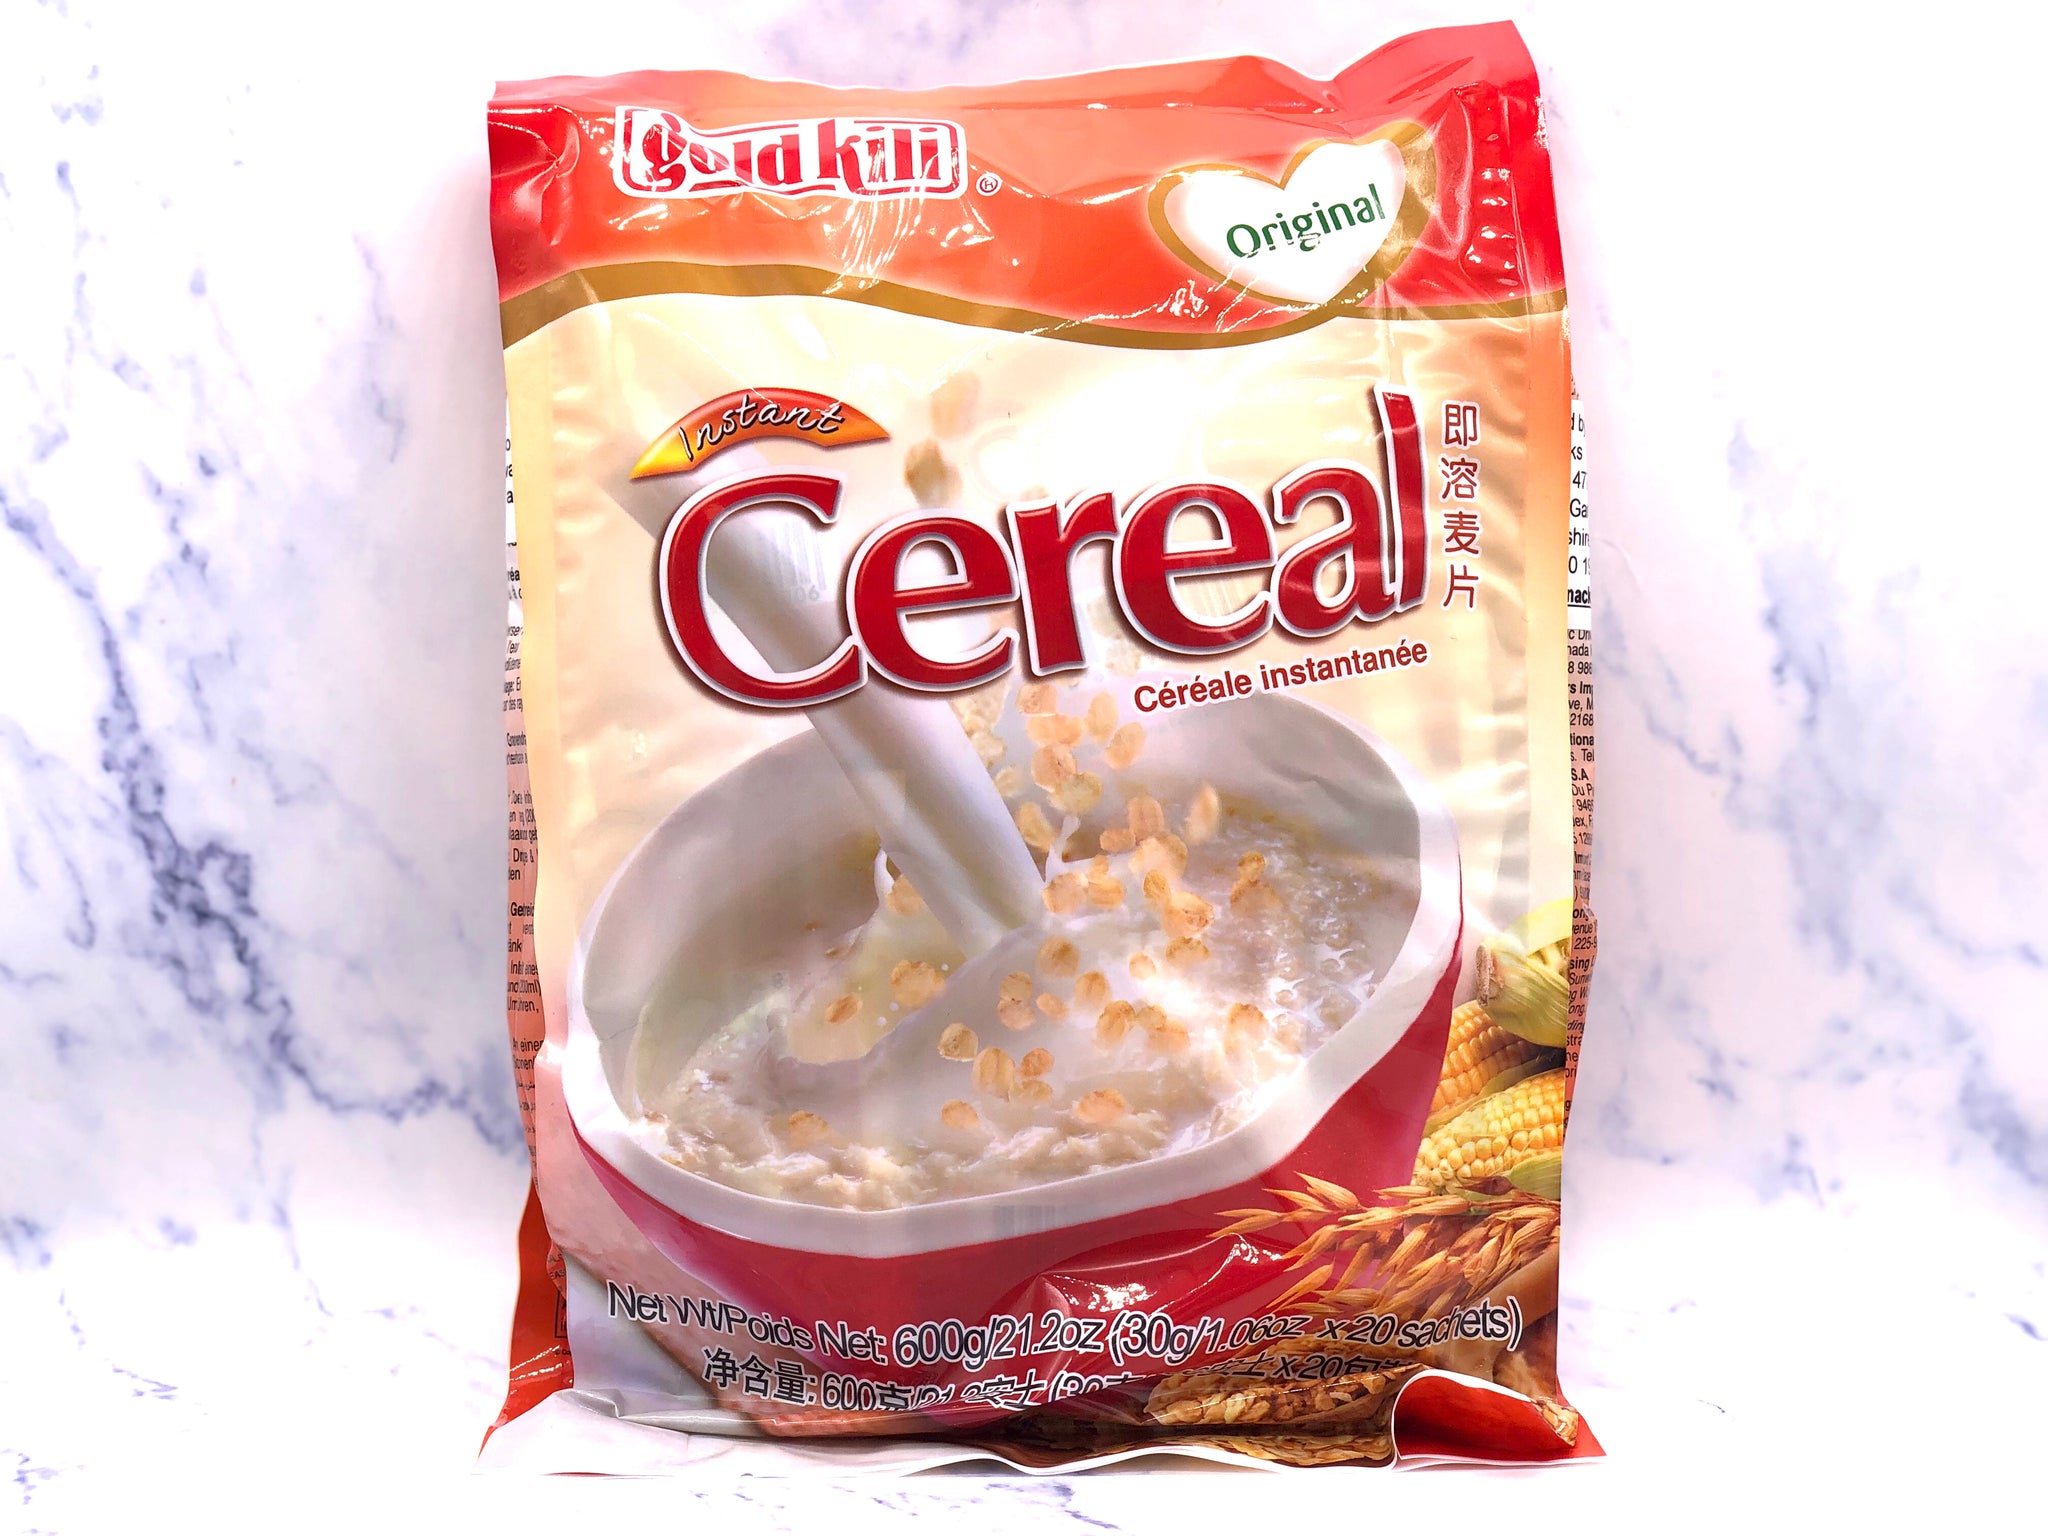 我们国人爱吃的中式麦片 GK 3in1 Cereal